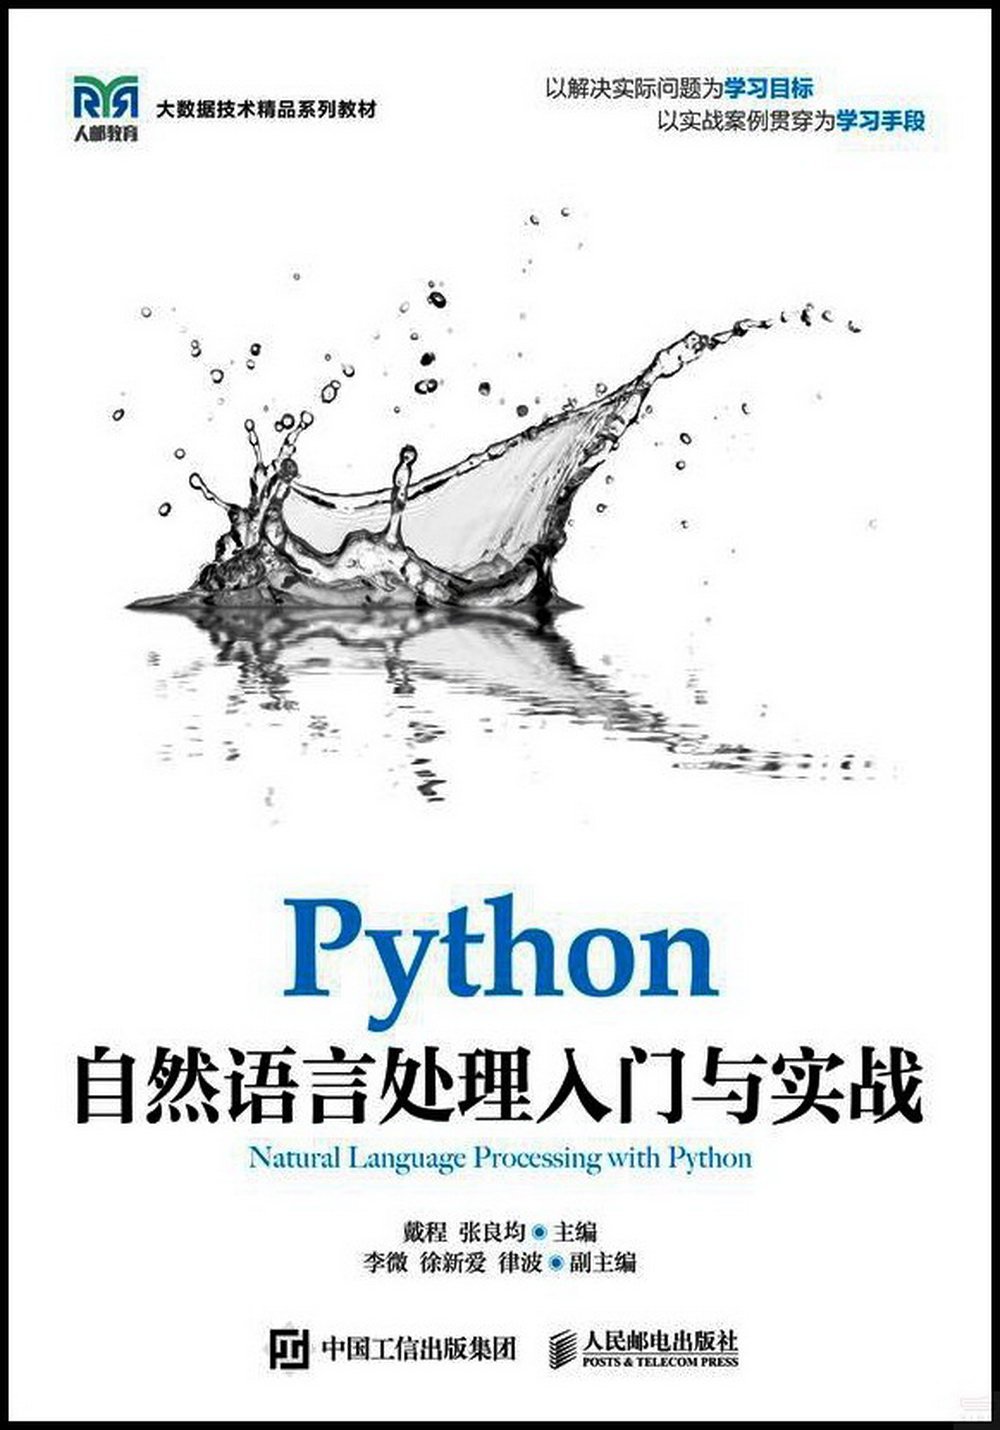 Python自然語言處理入門與實戰